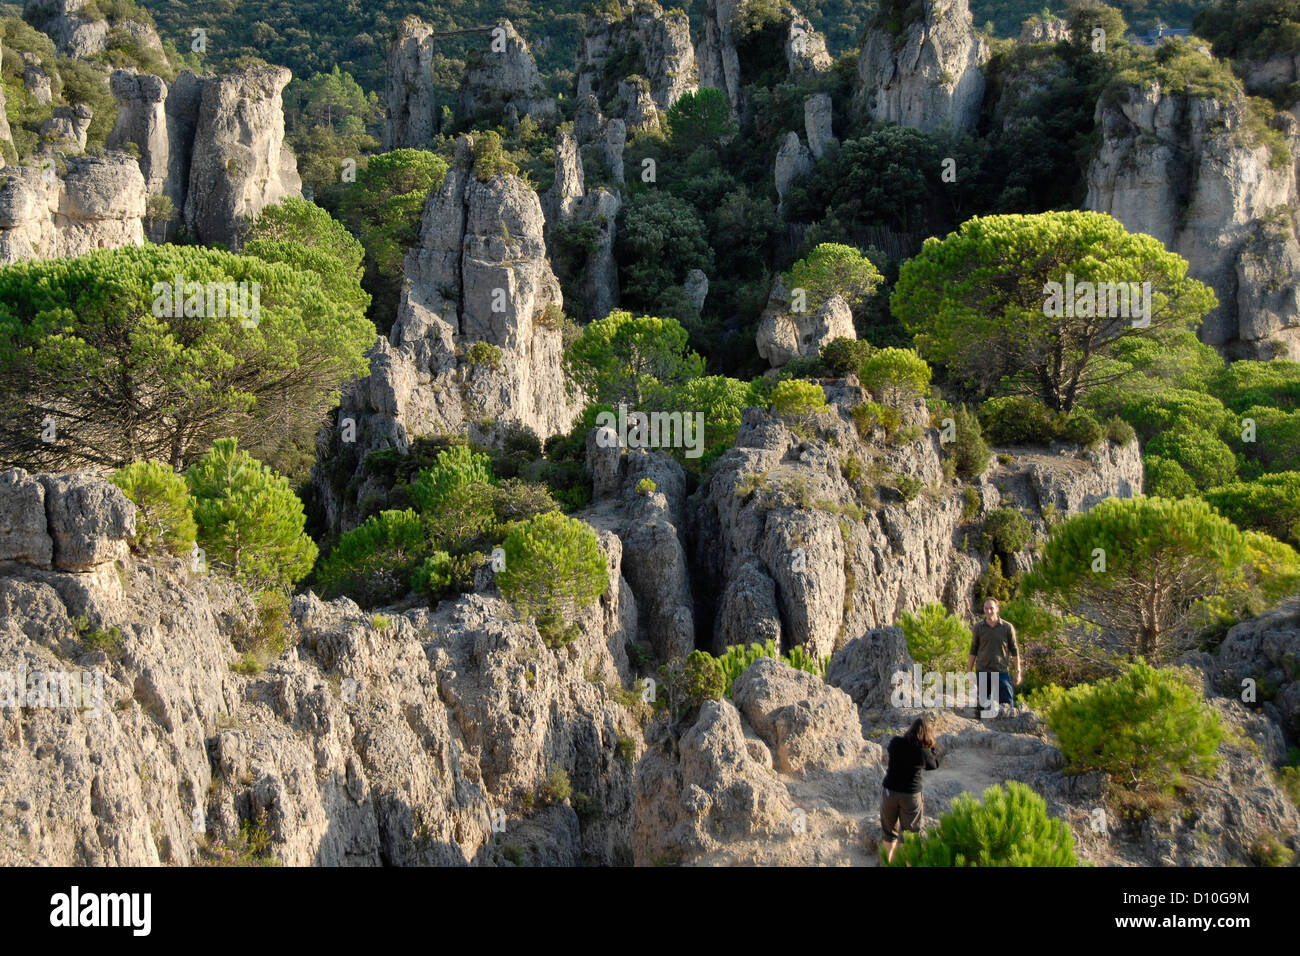 Dolomite rock columns, standing rocks because of erosion, people, Cirque de Moureze, Languedoc-Roussillon, France, Europe Stock Photo